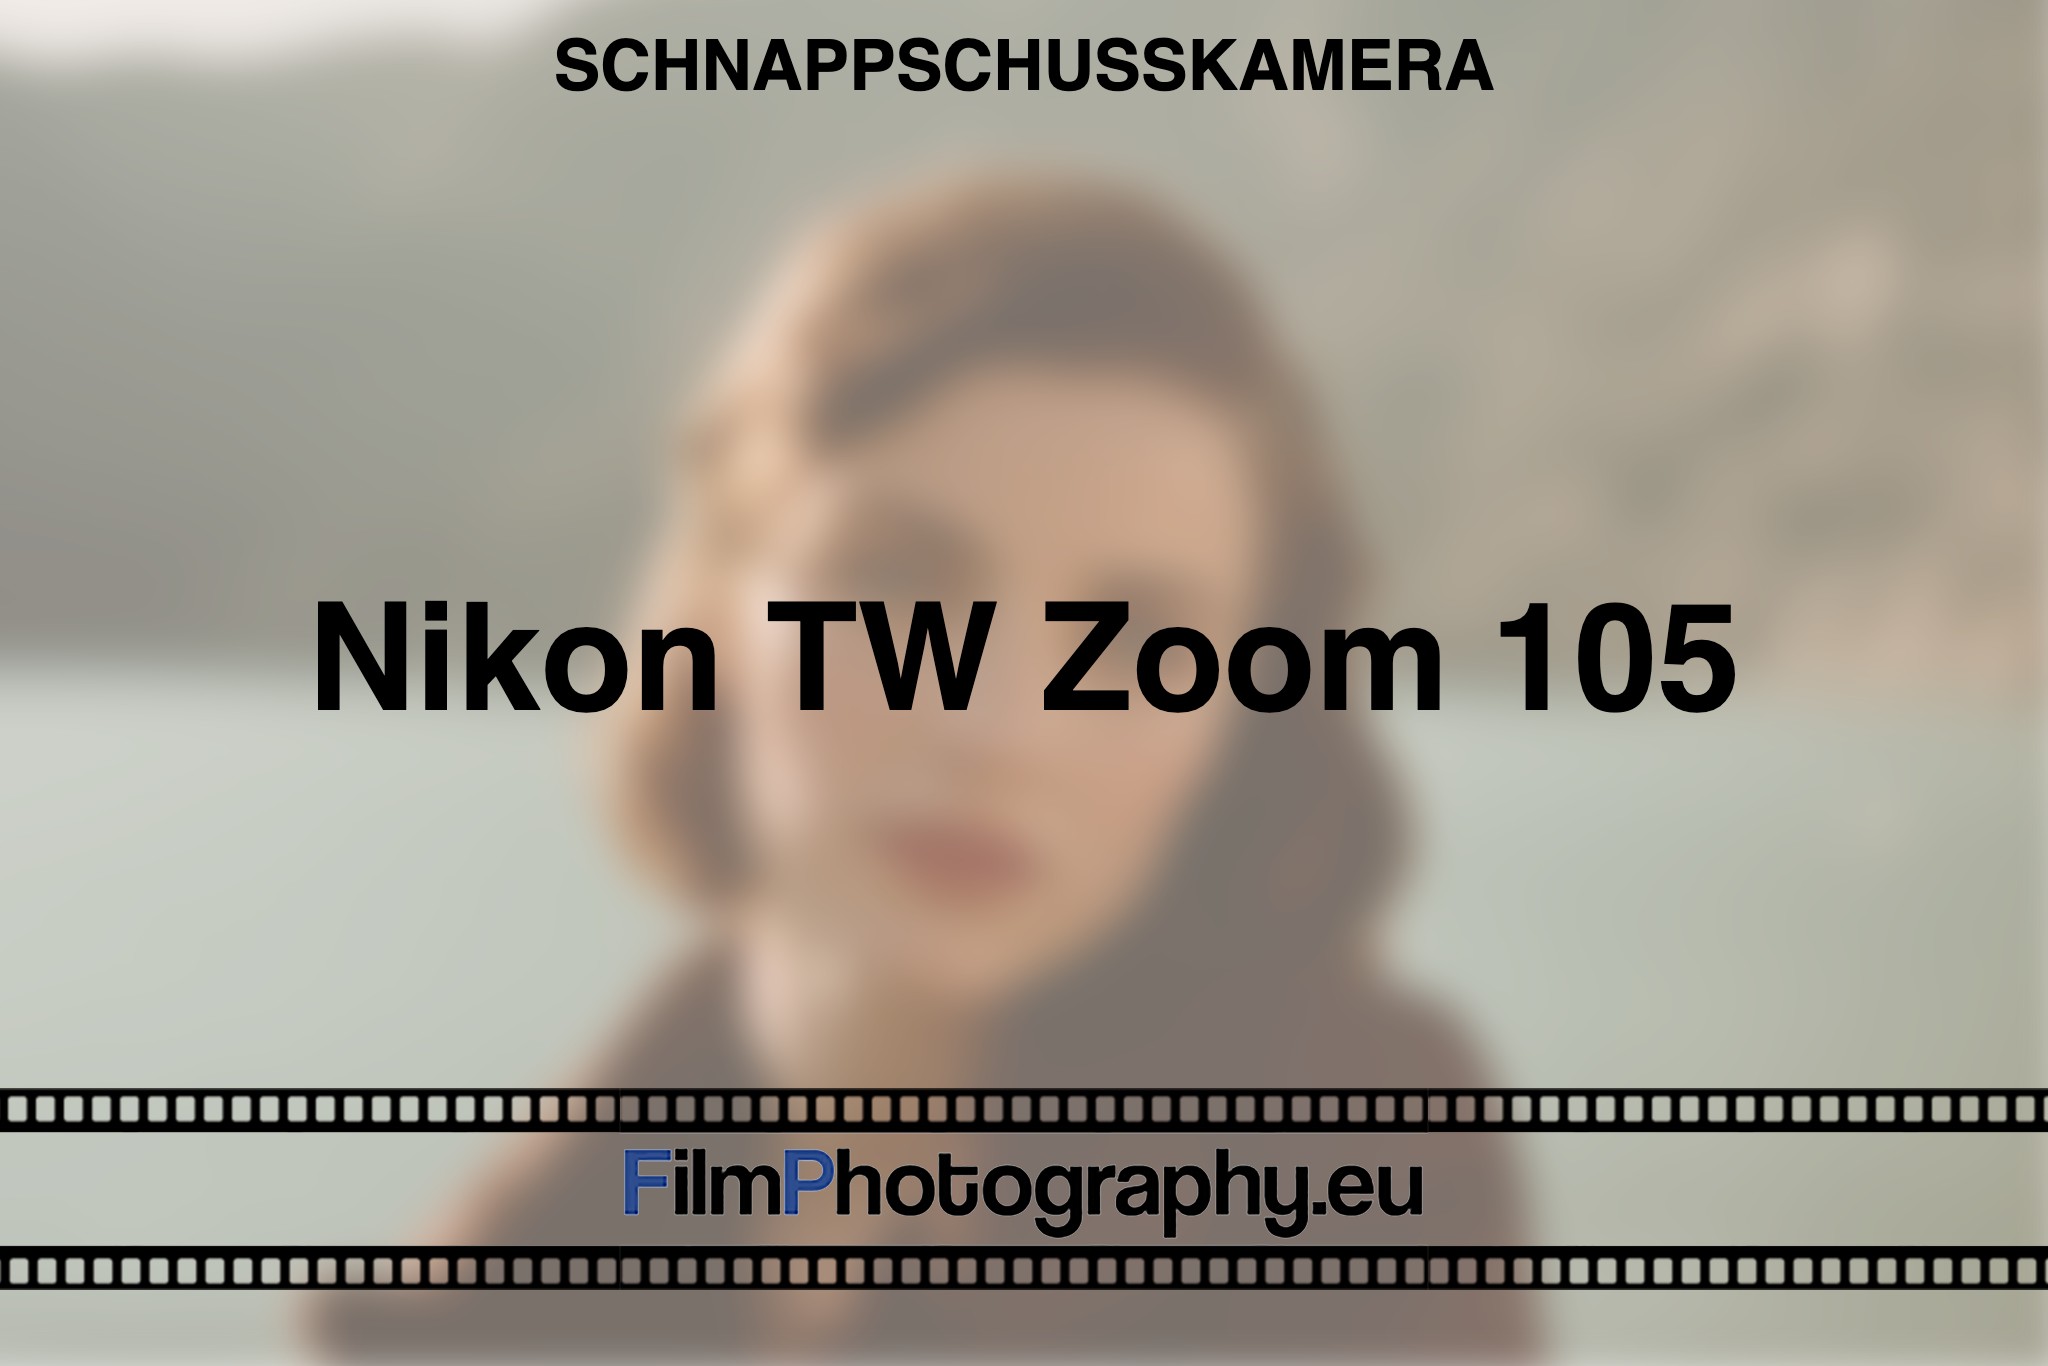 nikon-tw-zoom-105-schnappschusskamera-bnv